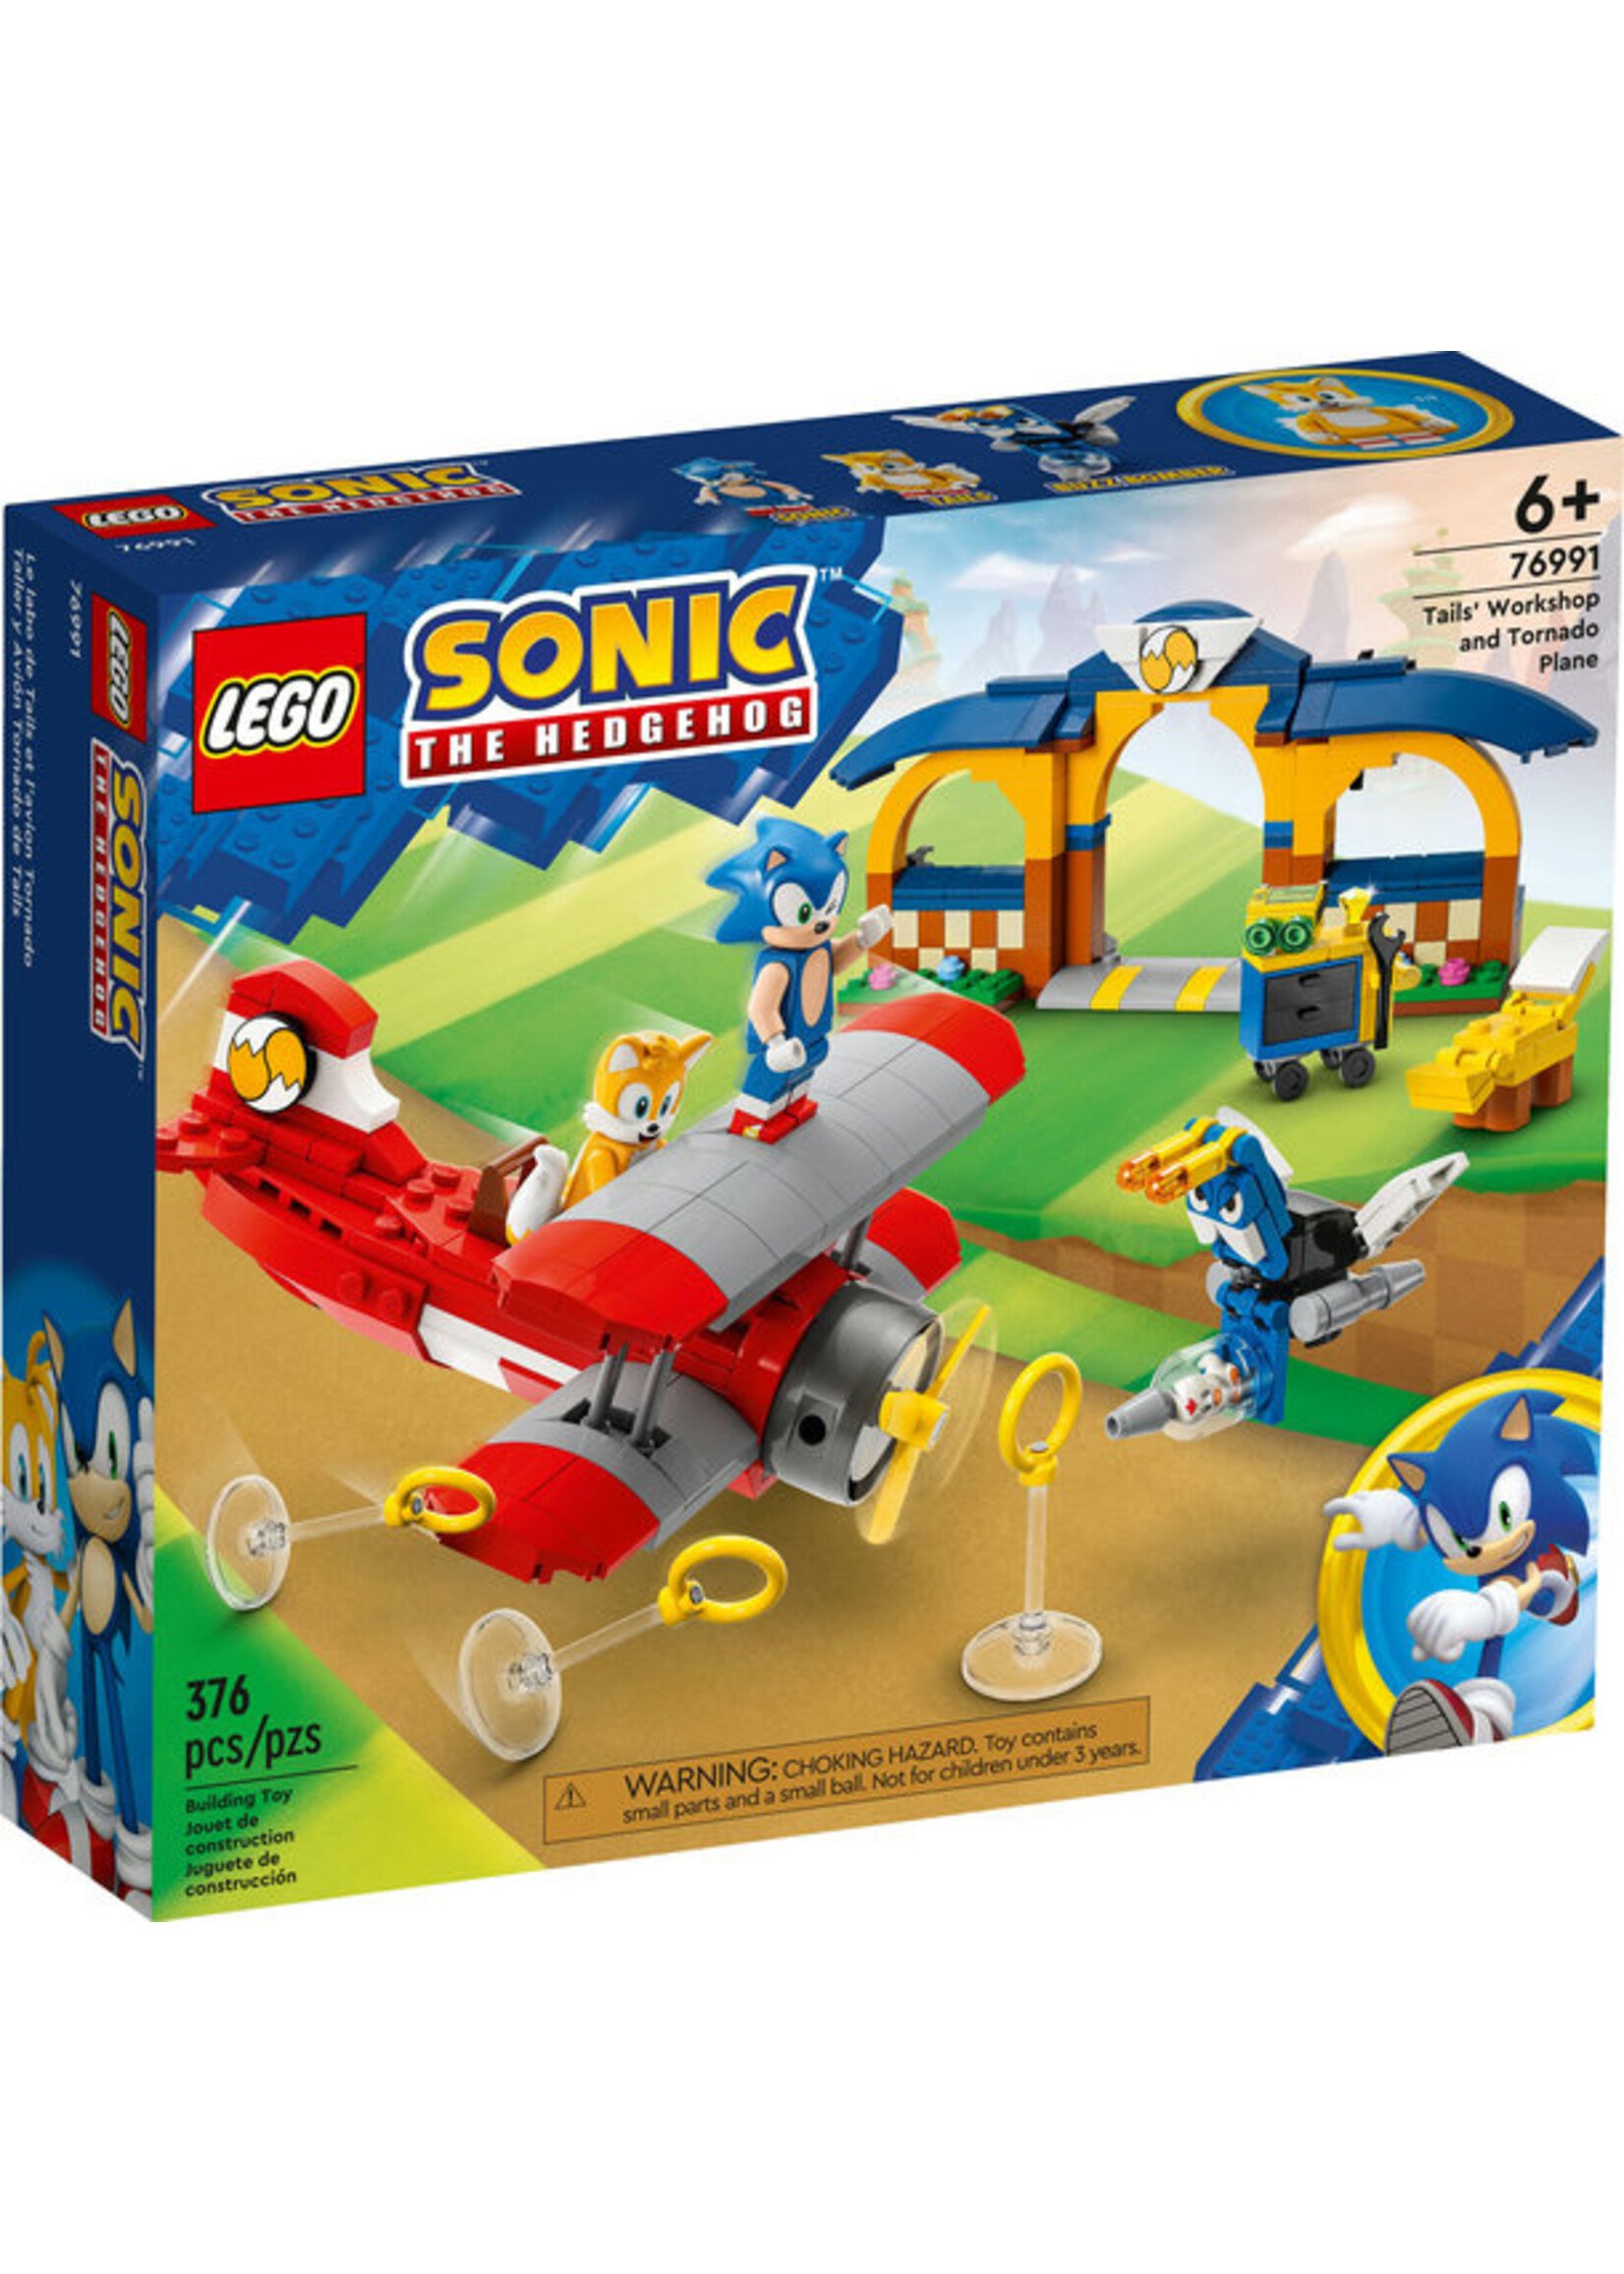  LEGO Sonic The Hedgehog Tails' Workshop and Tornado